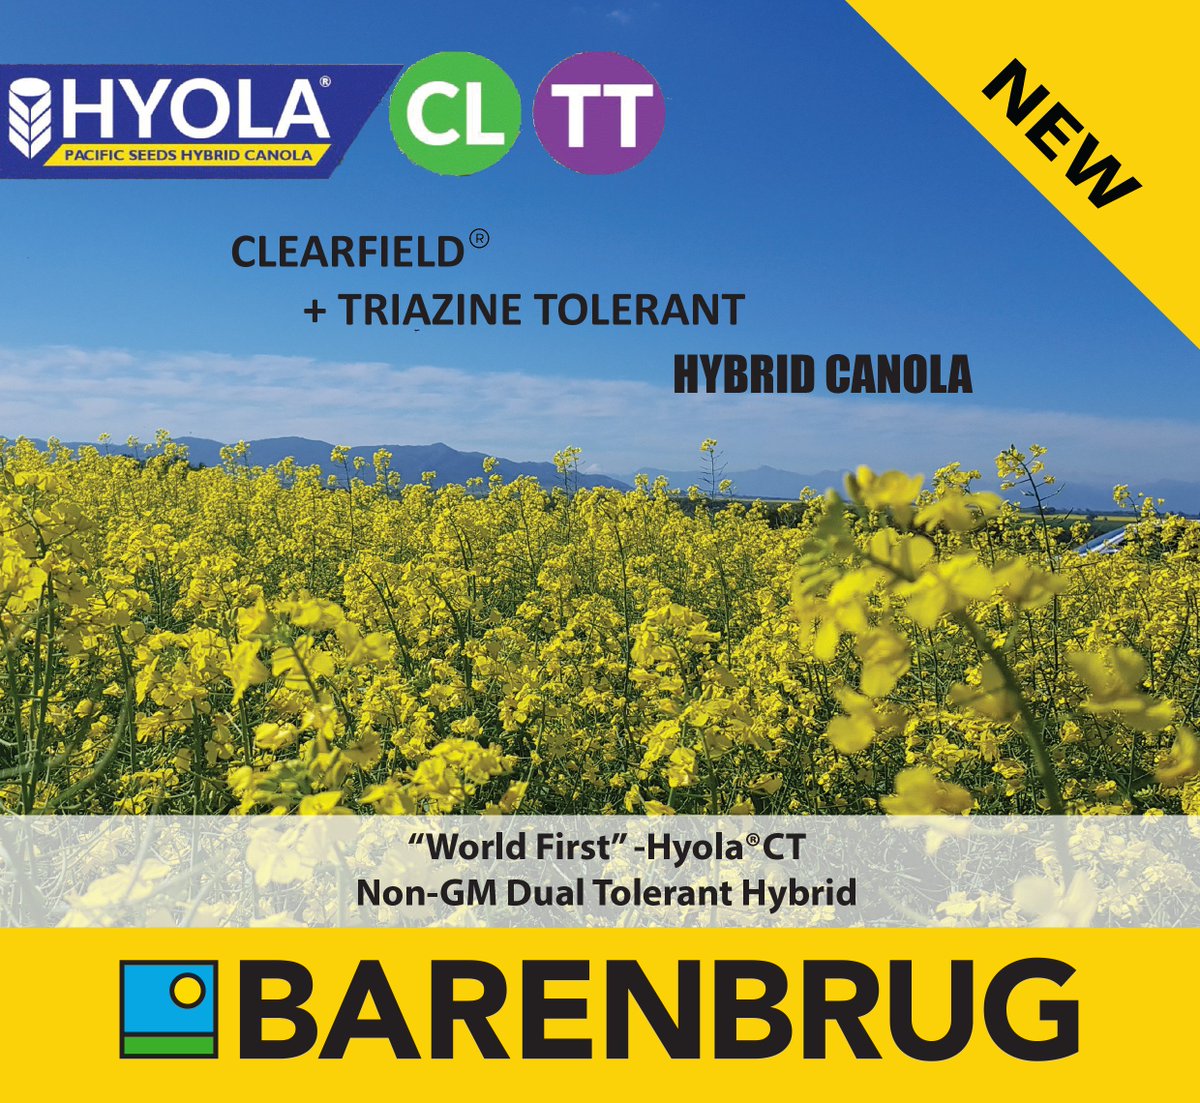 “World First” - Hyola®CT  🔜 NEW to Barenbrug! #BarenbrugSA #QualityAtItsBest #YellowSolution #HybridCanola